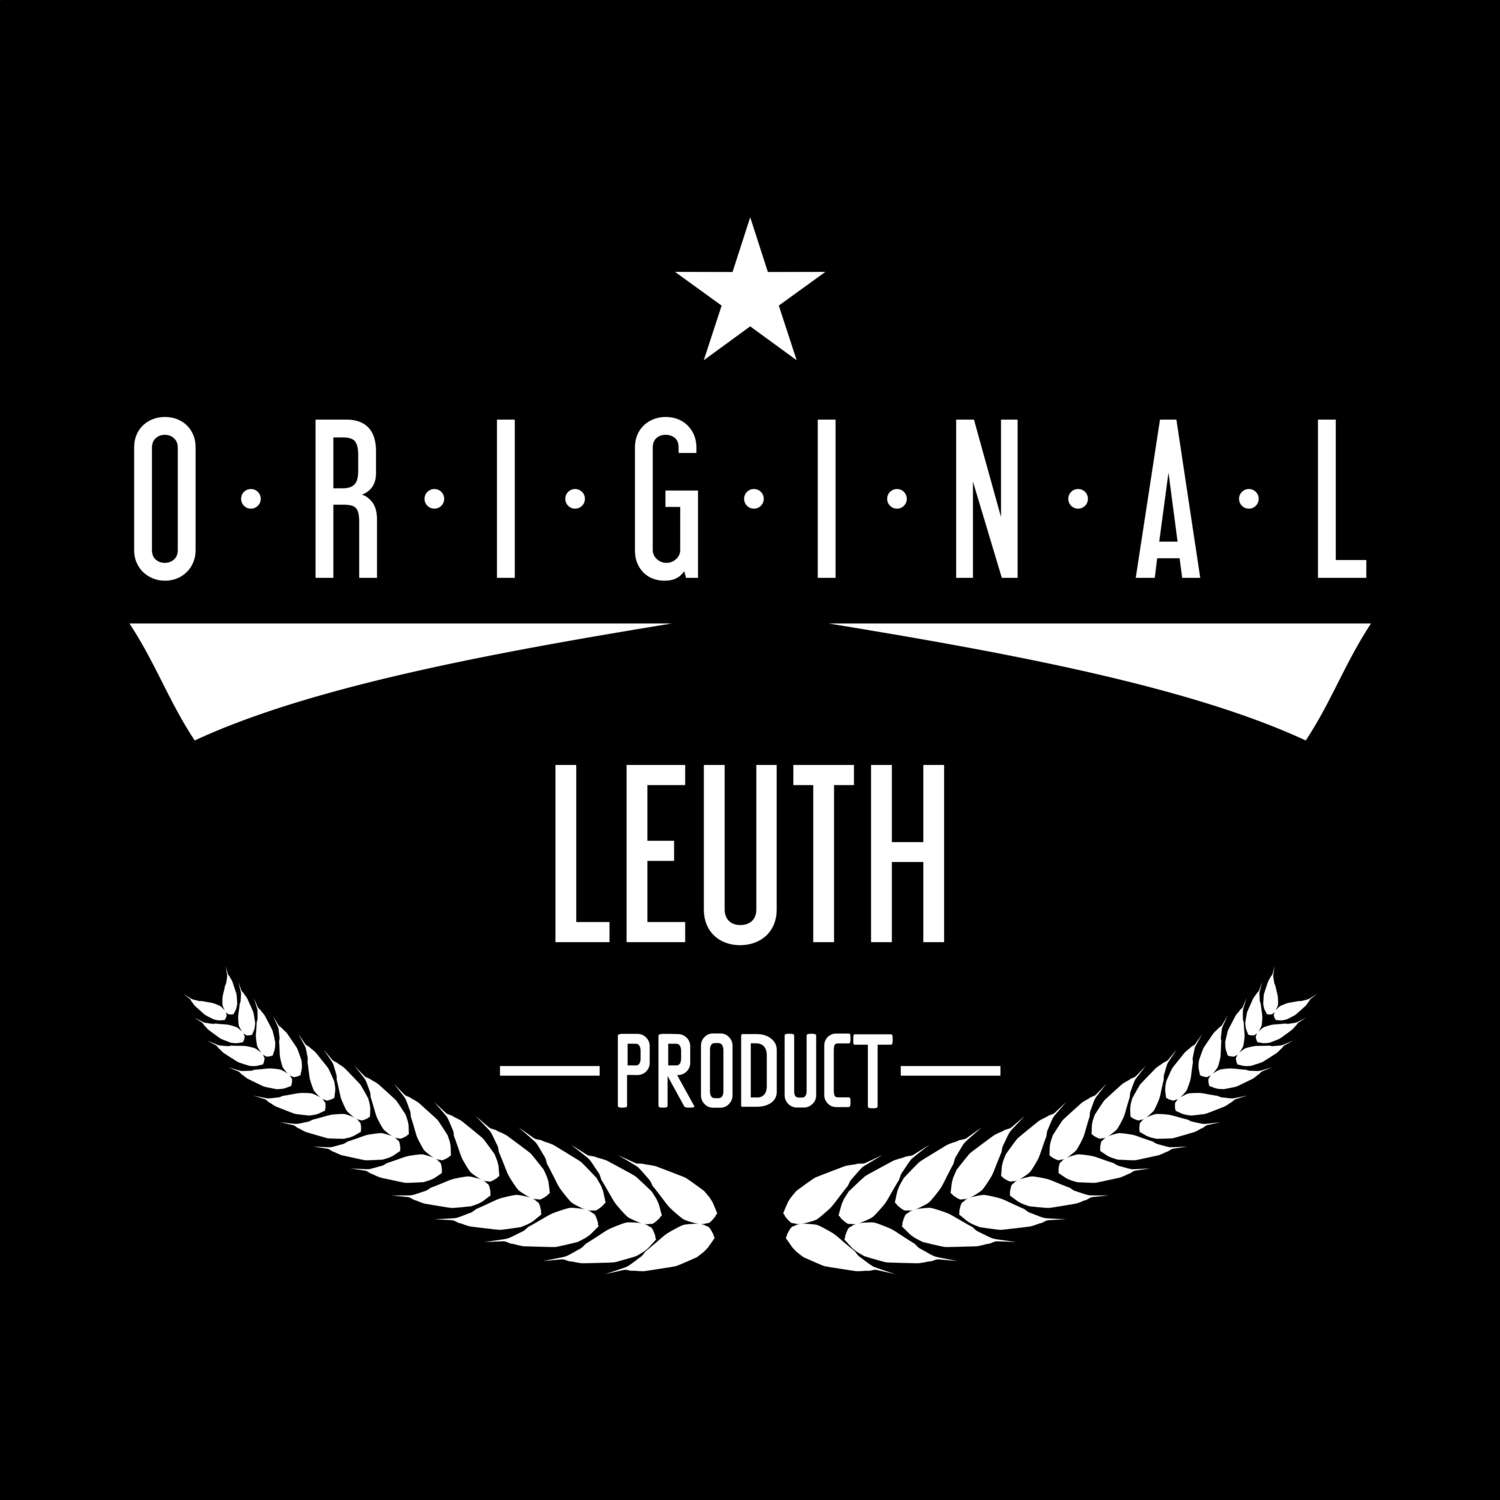 Leuth T-Shirt »Original Product«